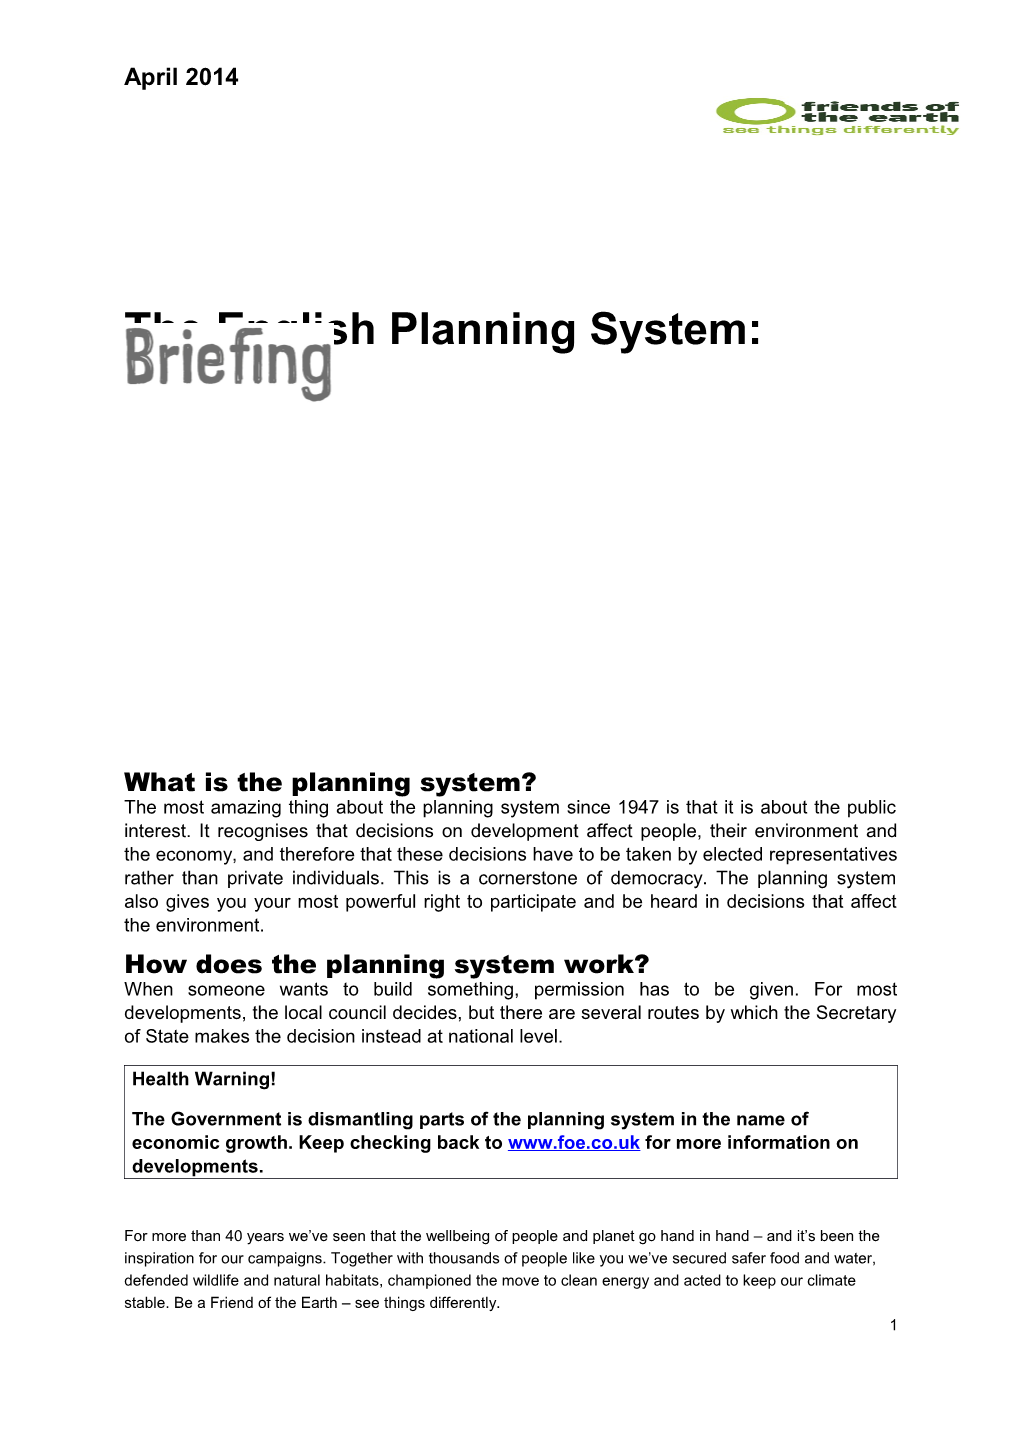 English Planning System